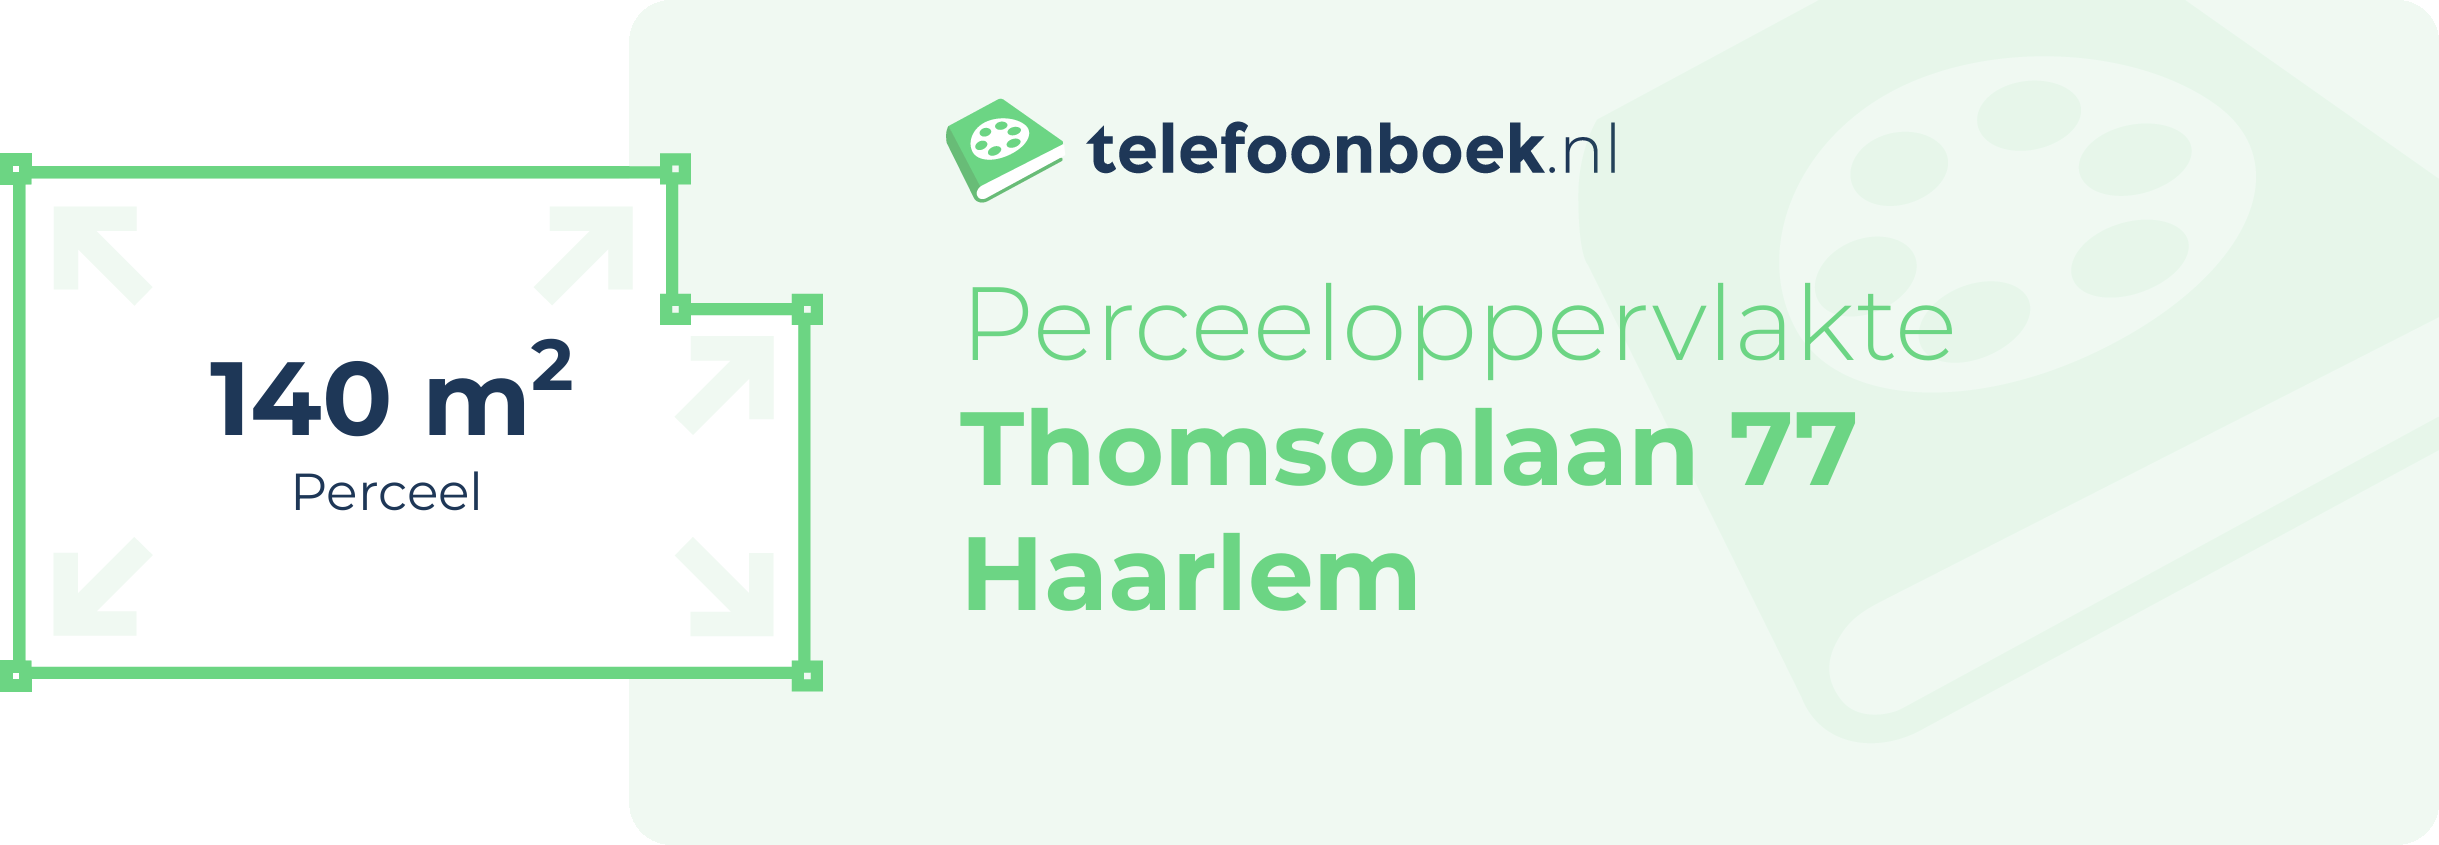 Perceeloppervlakte Thomsonlaan 77 Haarlem